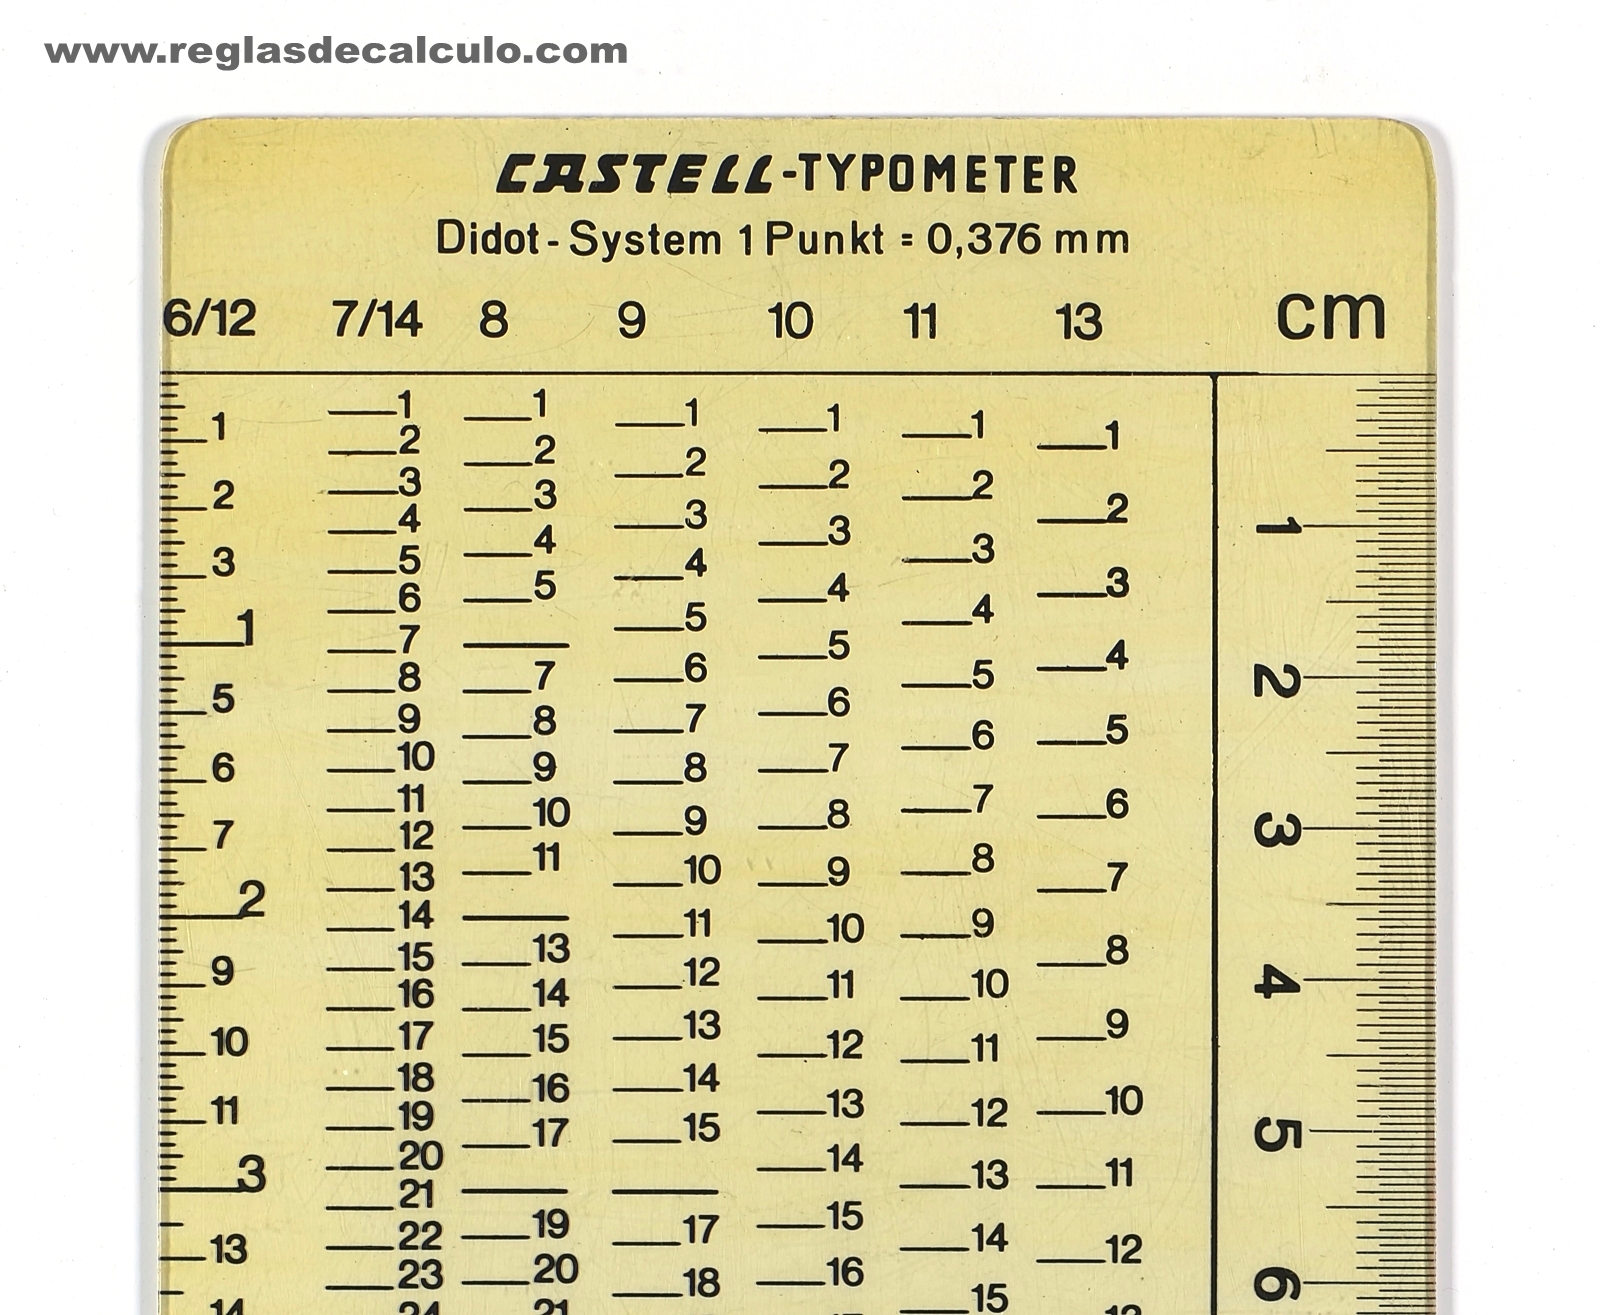 Faber Castell 20/66D Typometer Regla de Calculo Slide rule